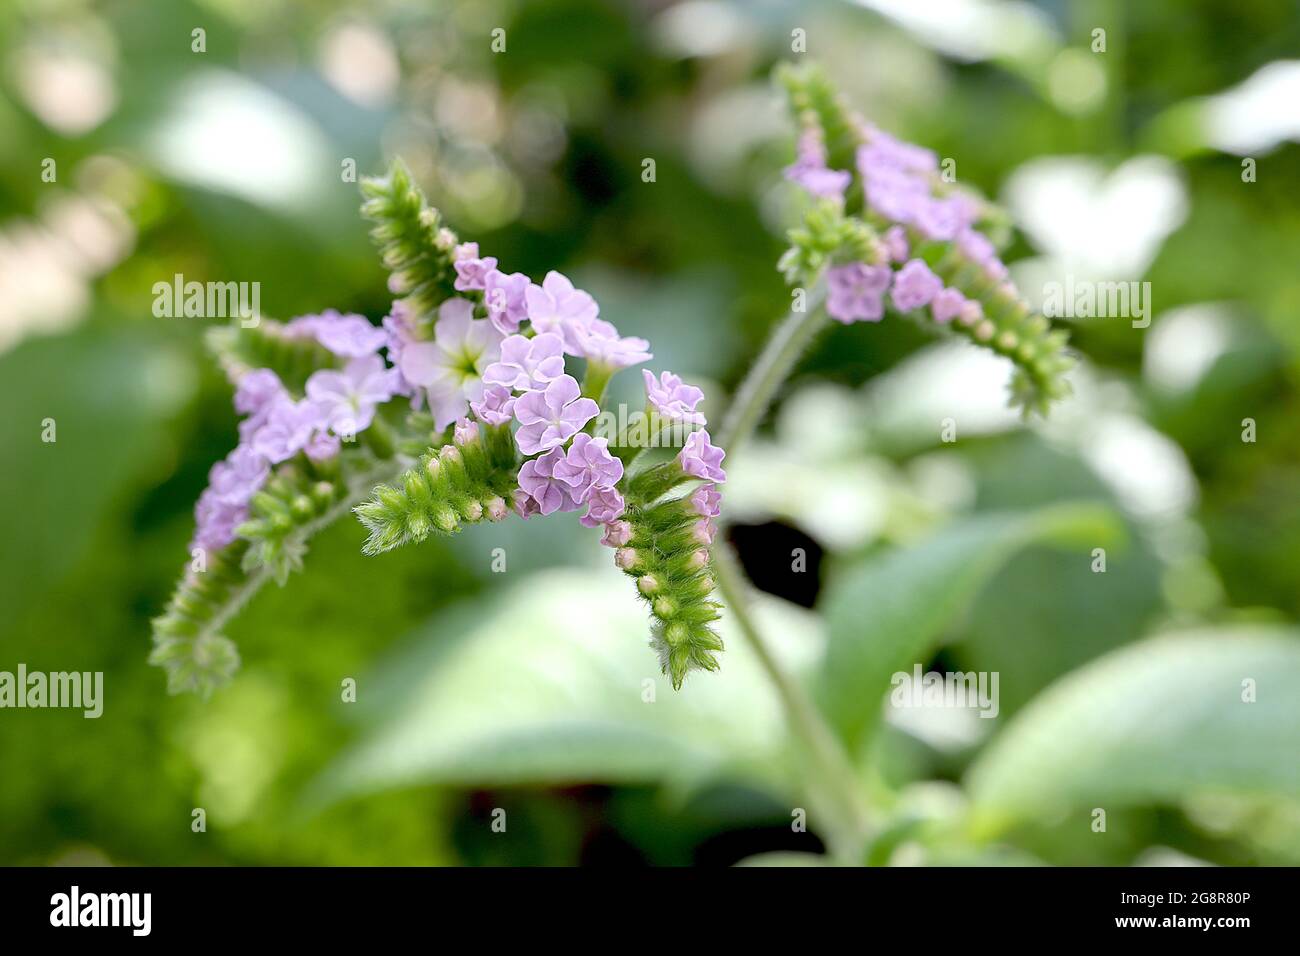 Heliotropium indicum Indian heliotrope – curved flower spikes of pale lavender flowers,  May, England, UK Stock Photo